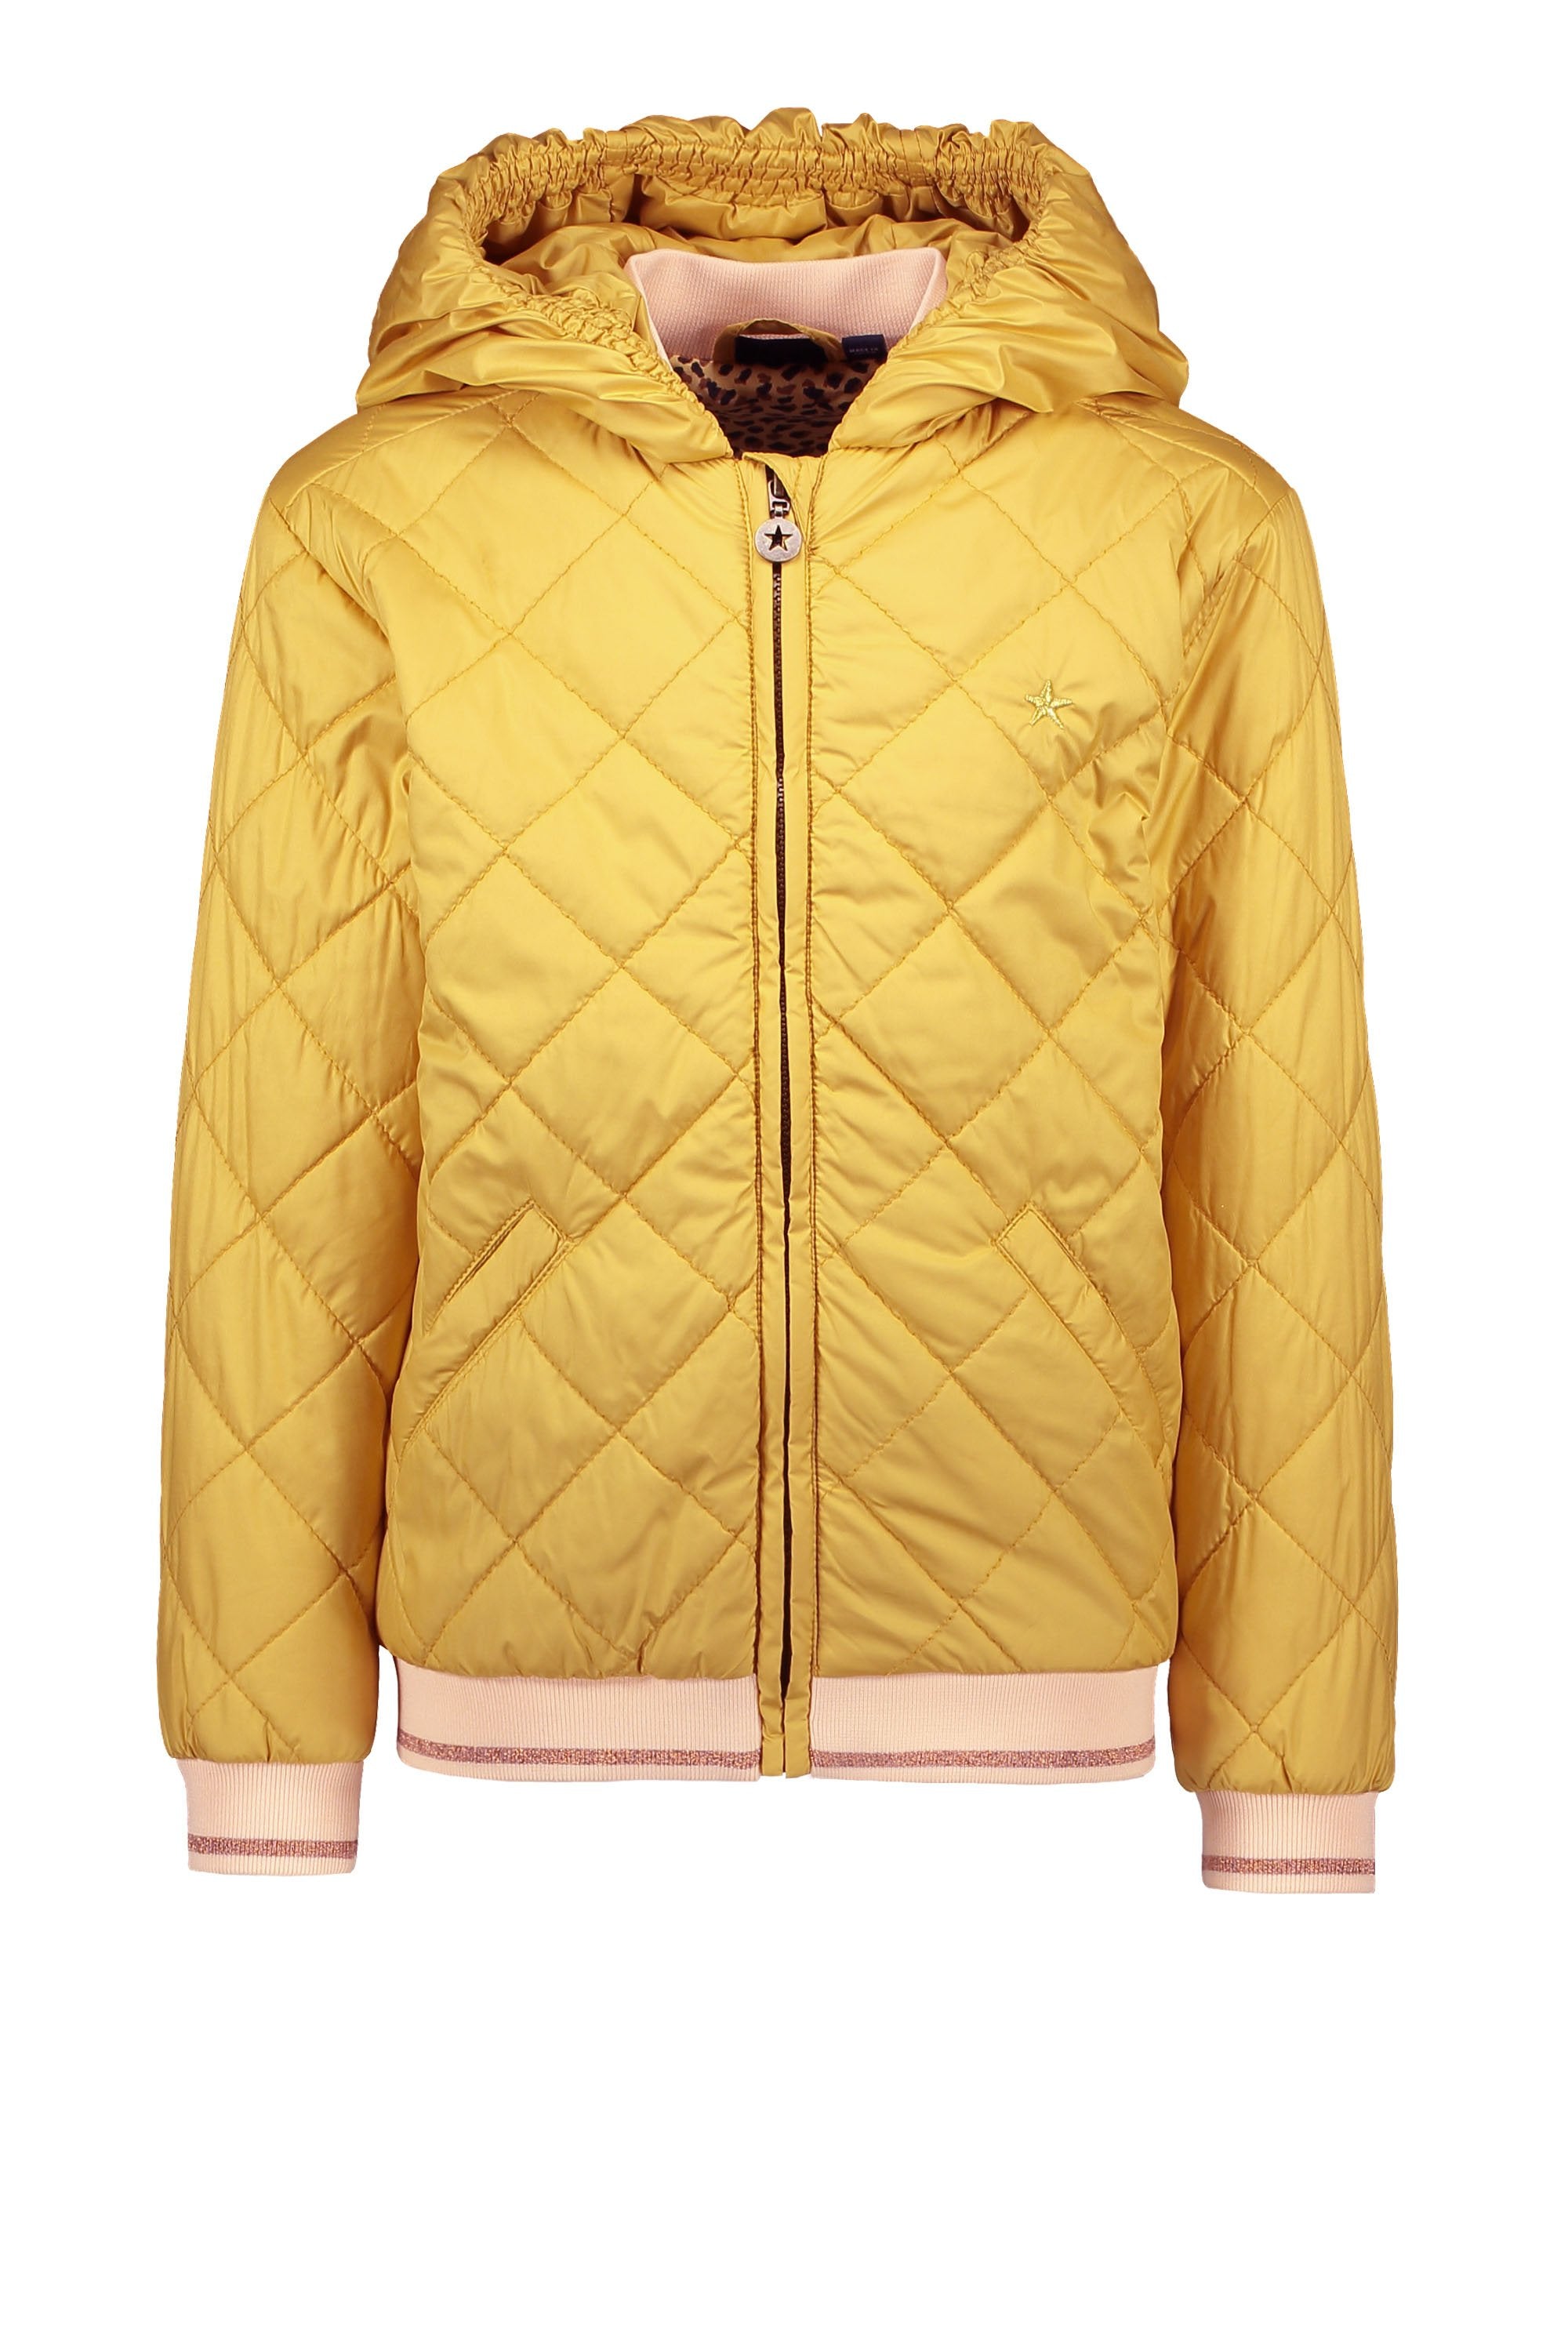 Meisjes Flo girls hooded summer jacket van Like Flo in de kleur Honey in maat 152.